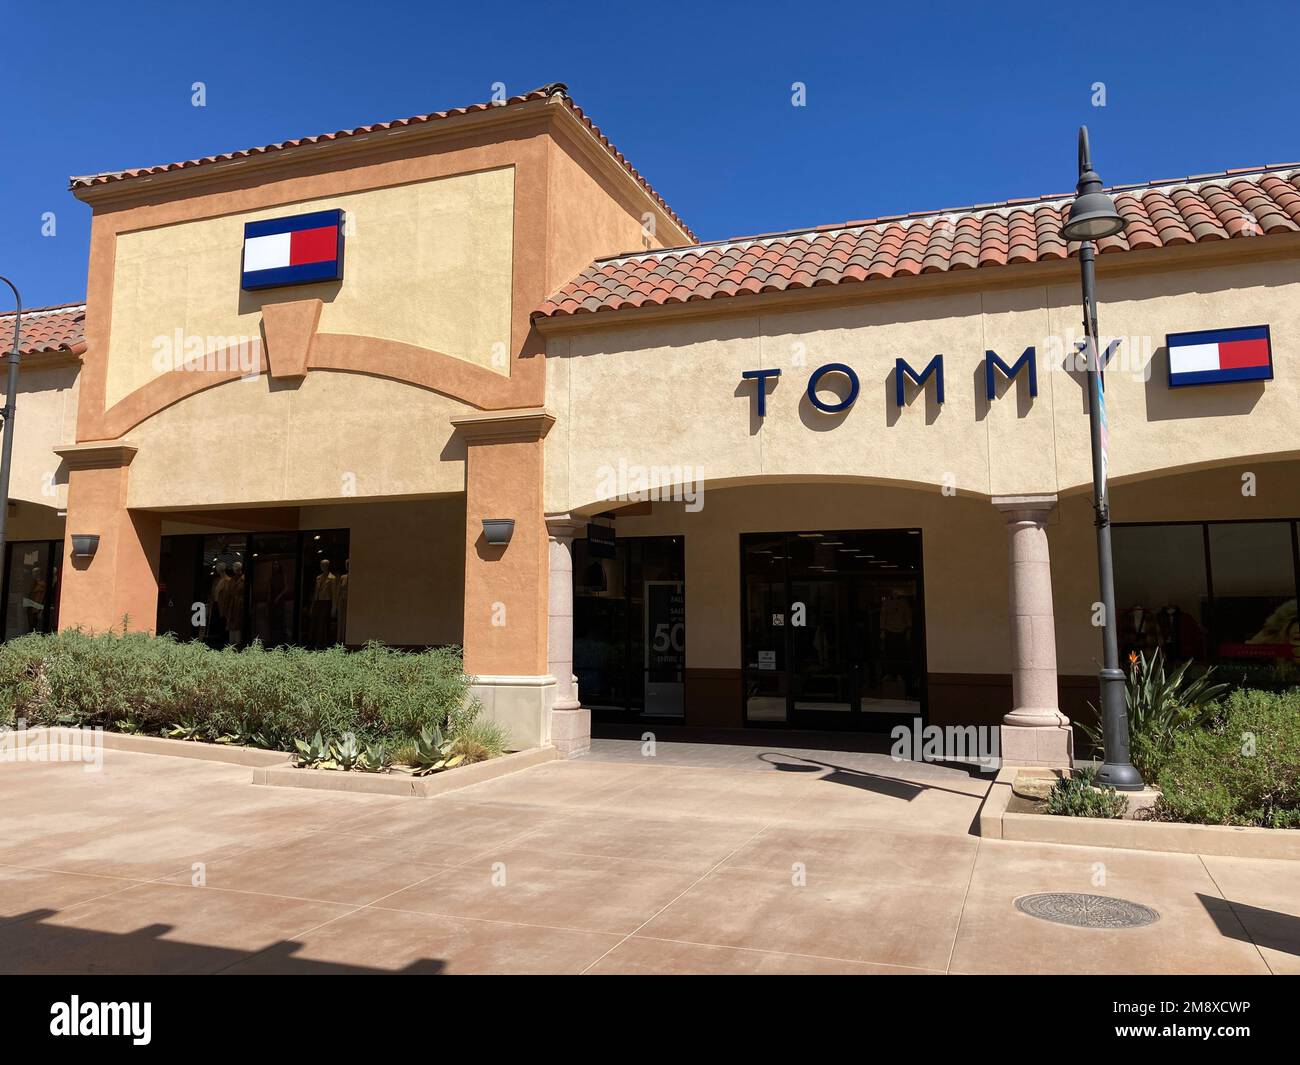 Tommy Hilfiger Outlet Livermore, CA - Last Updated September 2023